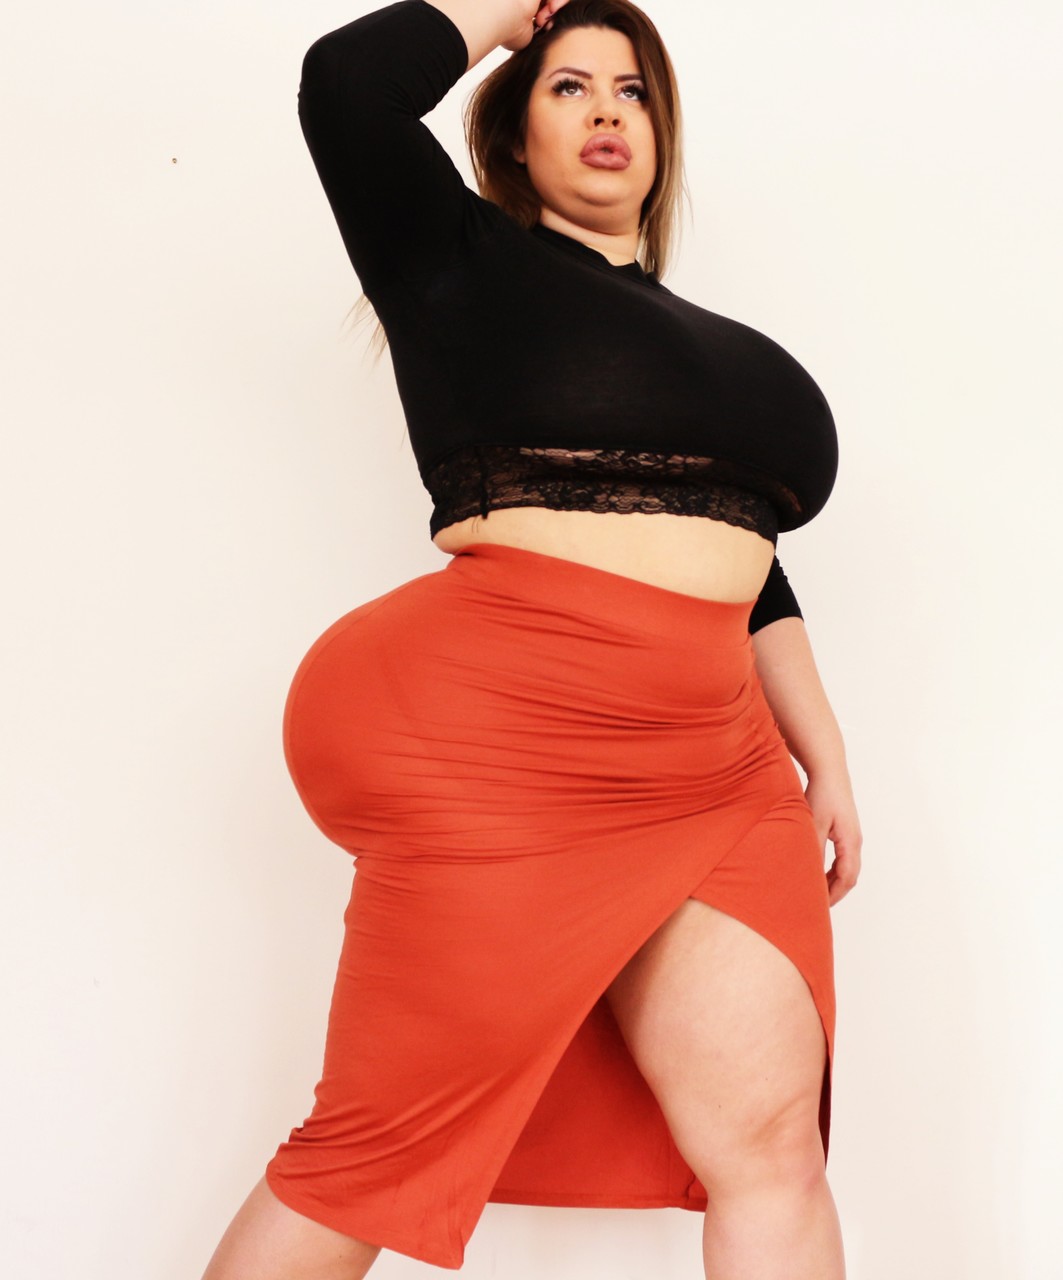 Stunning MILF fatty Natasha Crown flaunting her very big ass in a tight skirt Porno-Foto #423816656 | Natasha Crown Pics, Natasha Crown, BBW, Mobiler Porno